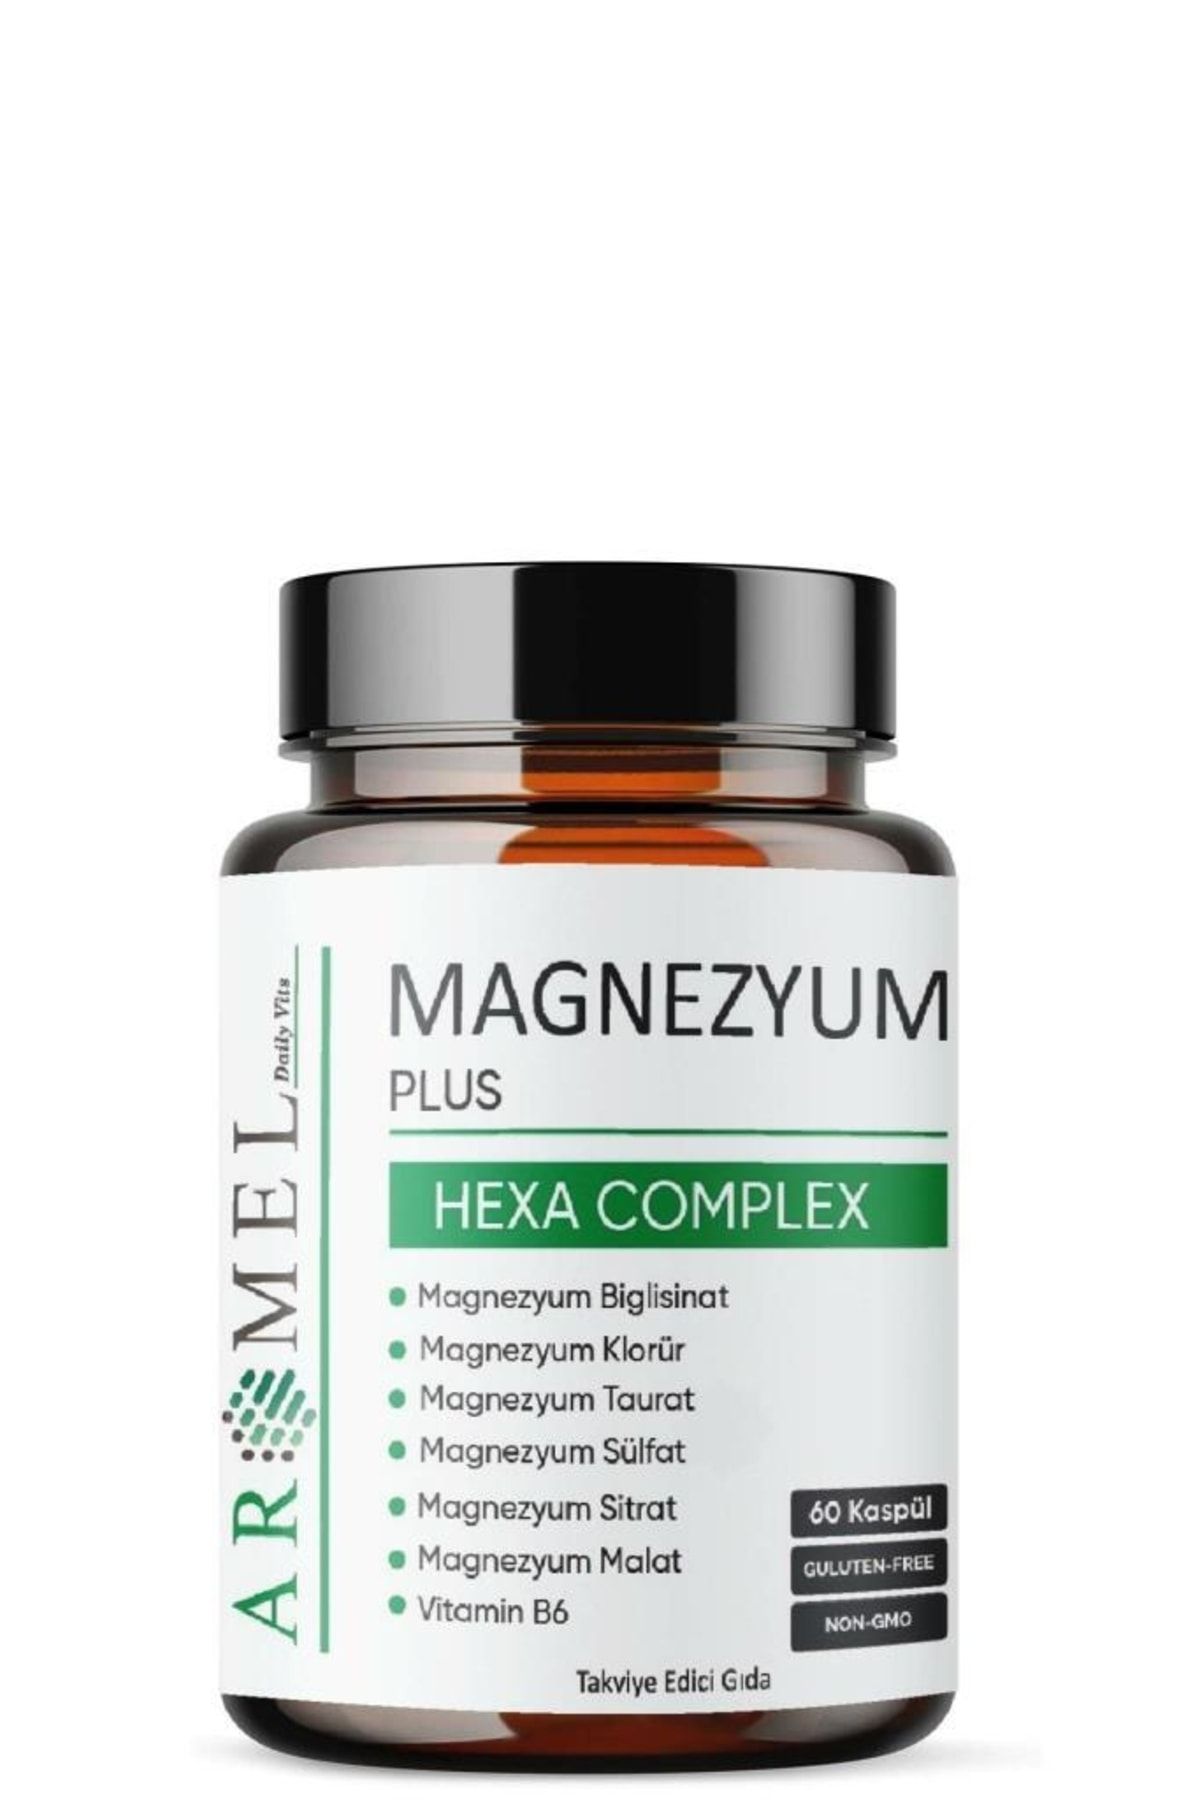 Aromel Magnezyum Plus, Hexa Complex | 60 Kapsül | Magnezyum,biglisinat,klorür,taurat,sülfat,sitrat,m